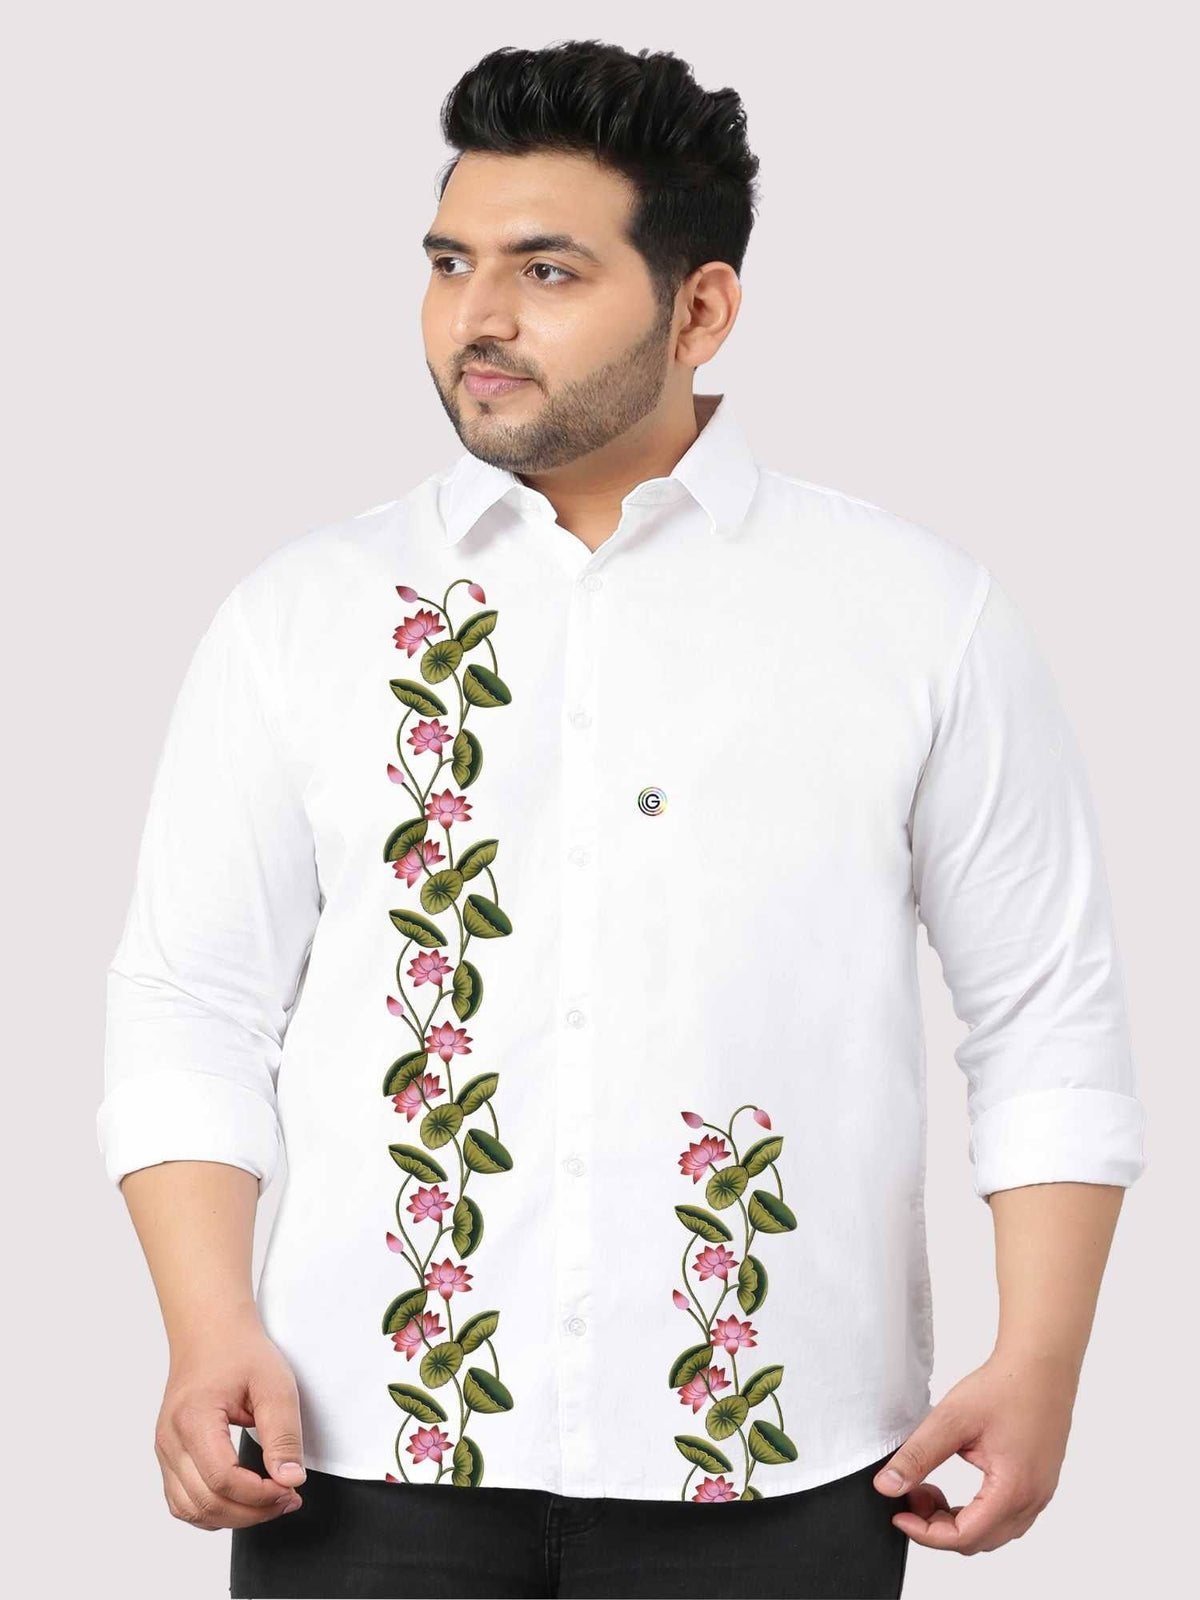 Flowers with Leaf Printed White Shirt Men's Plus Size - Guniaa Fashions